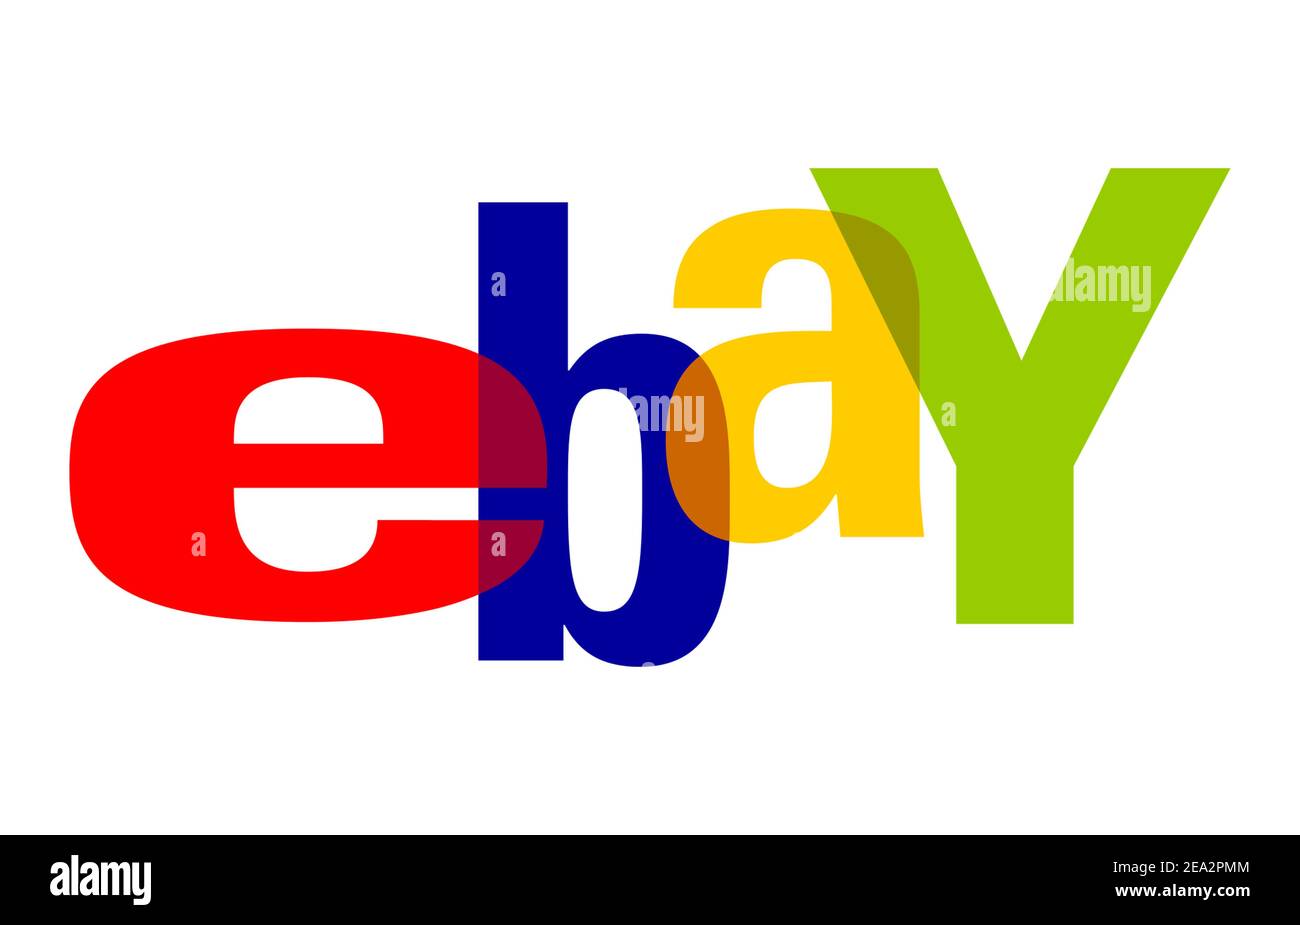 Ebay e-commerce platform Stock Photo